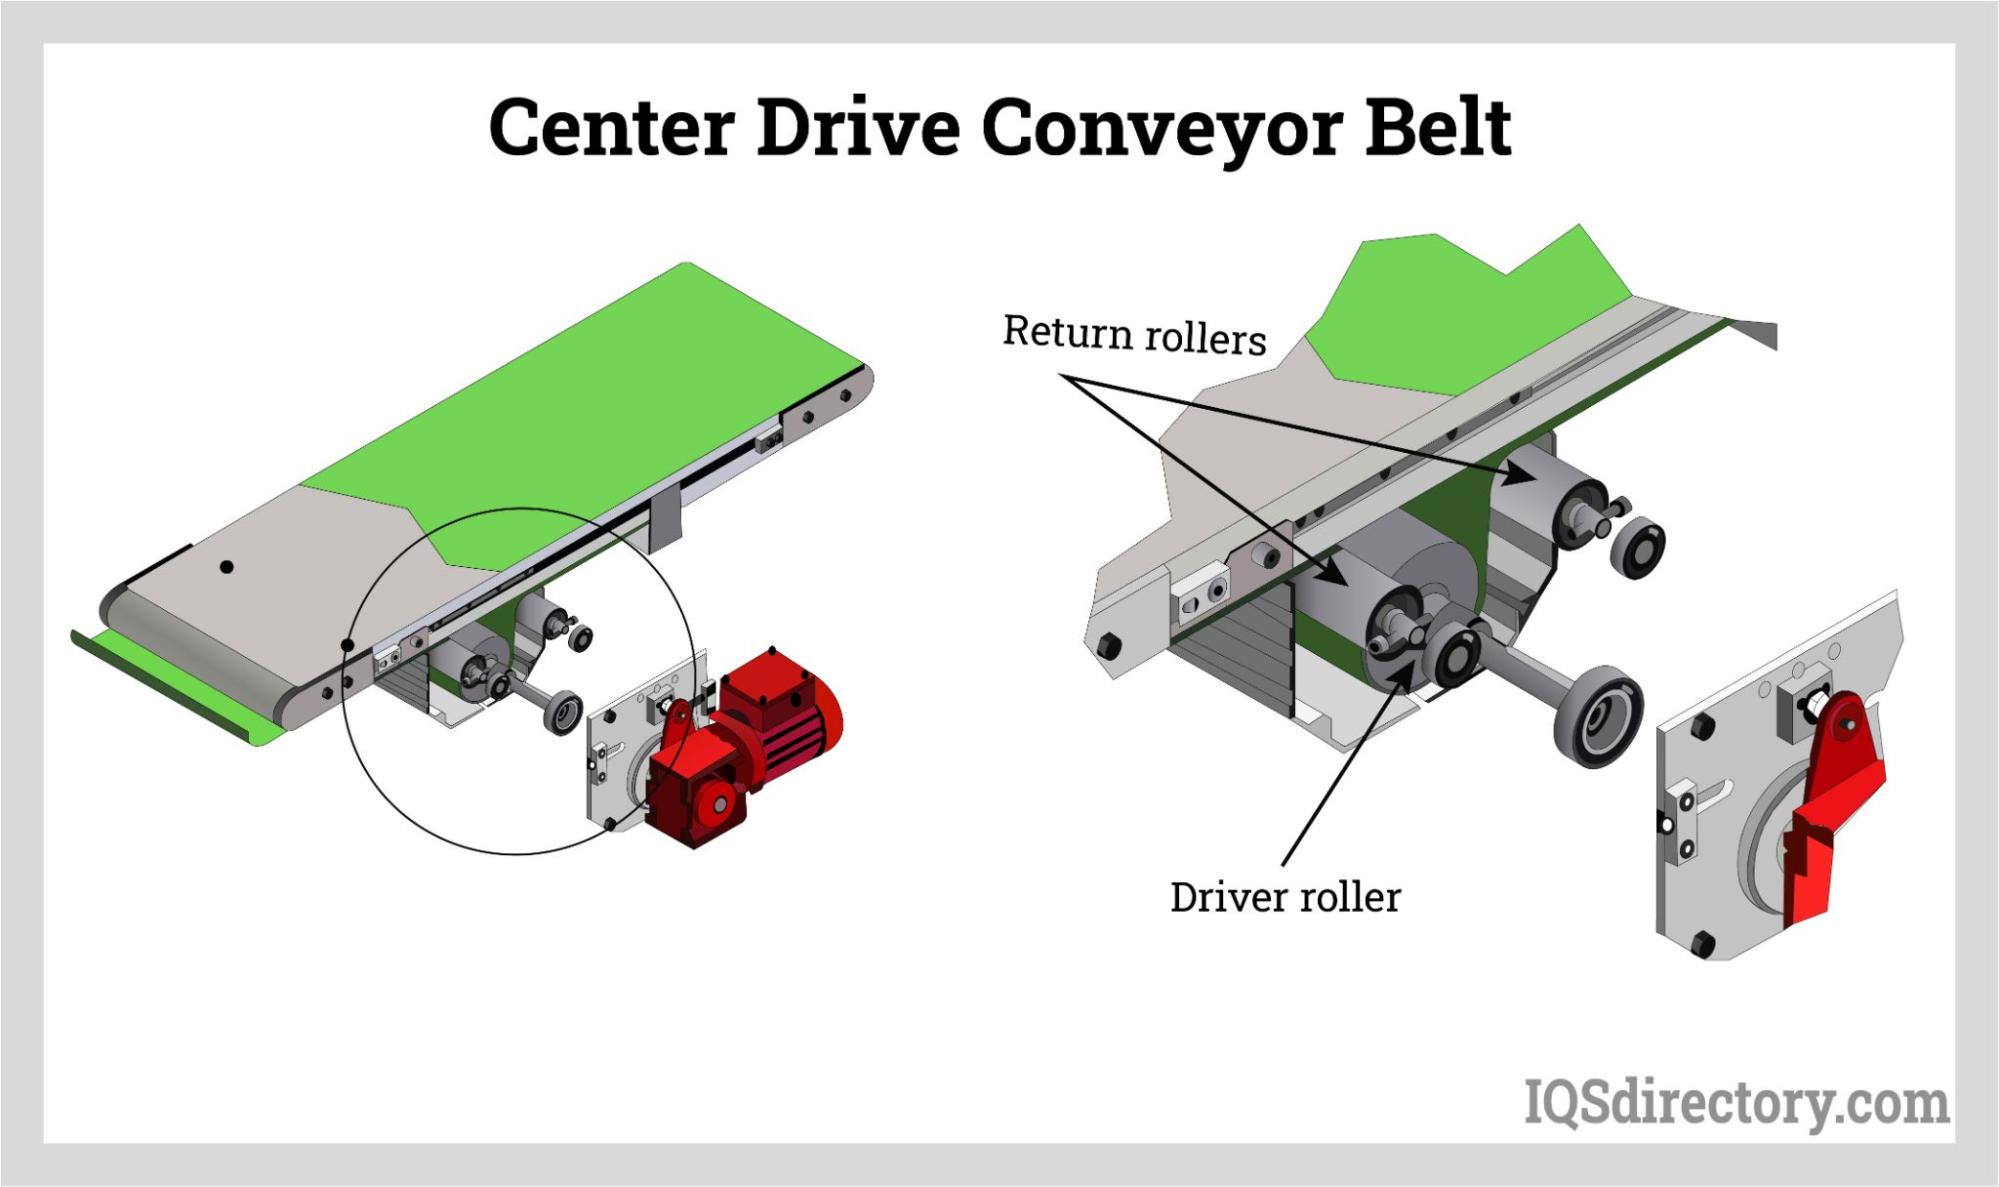 Center Drive Conveyor Belt